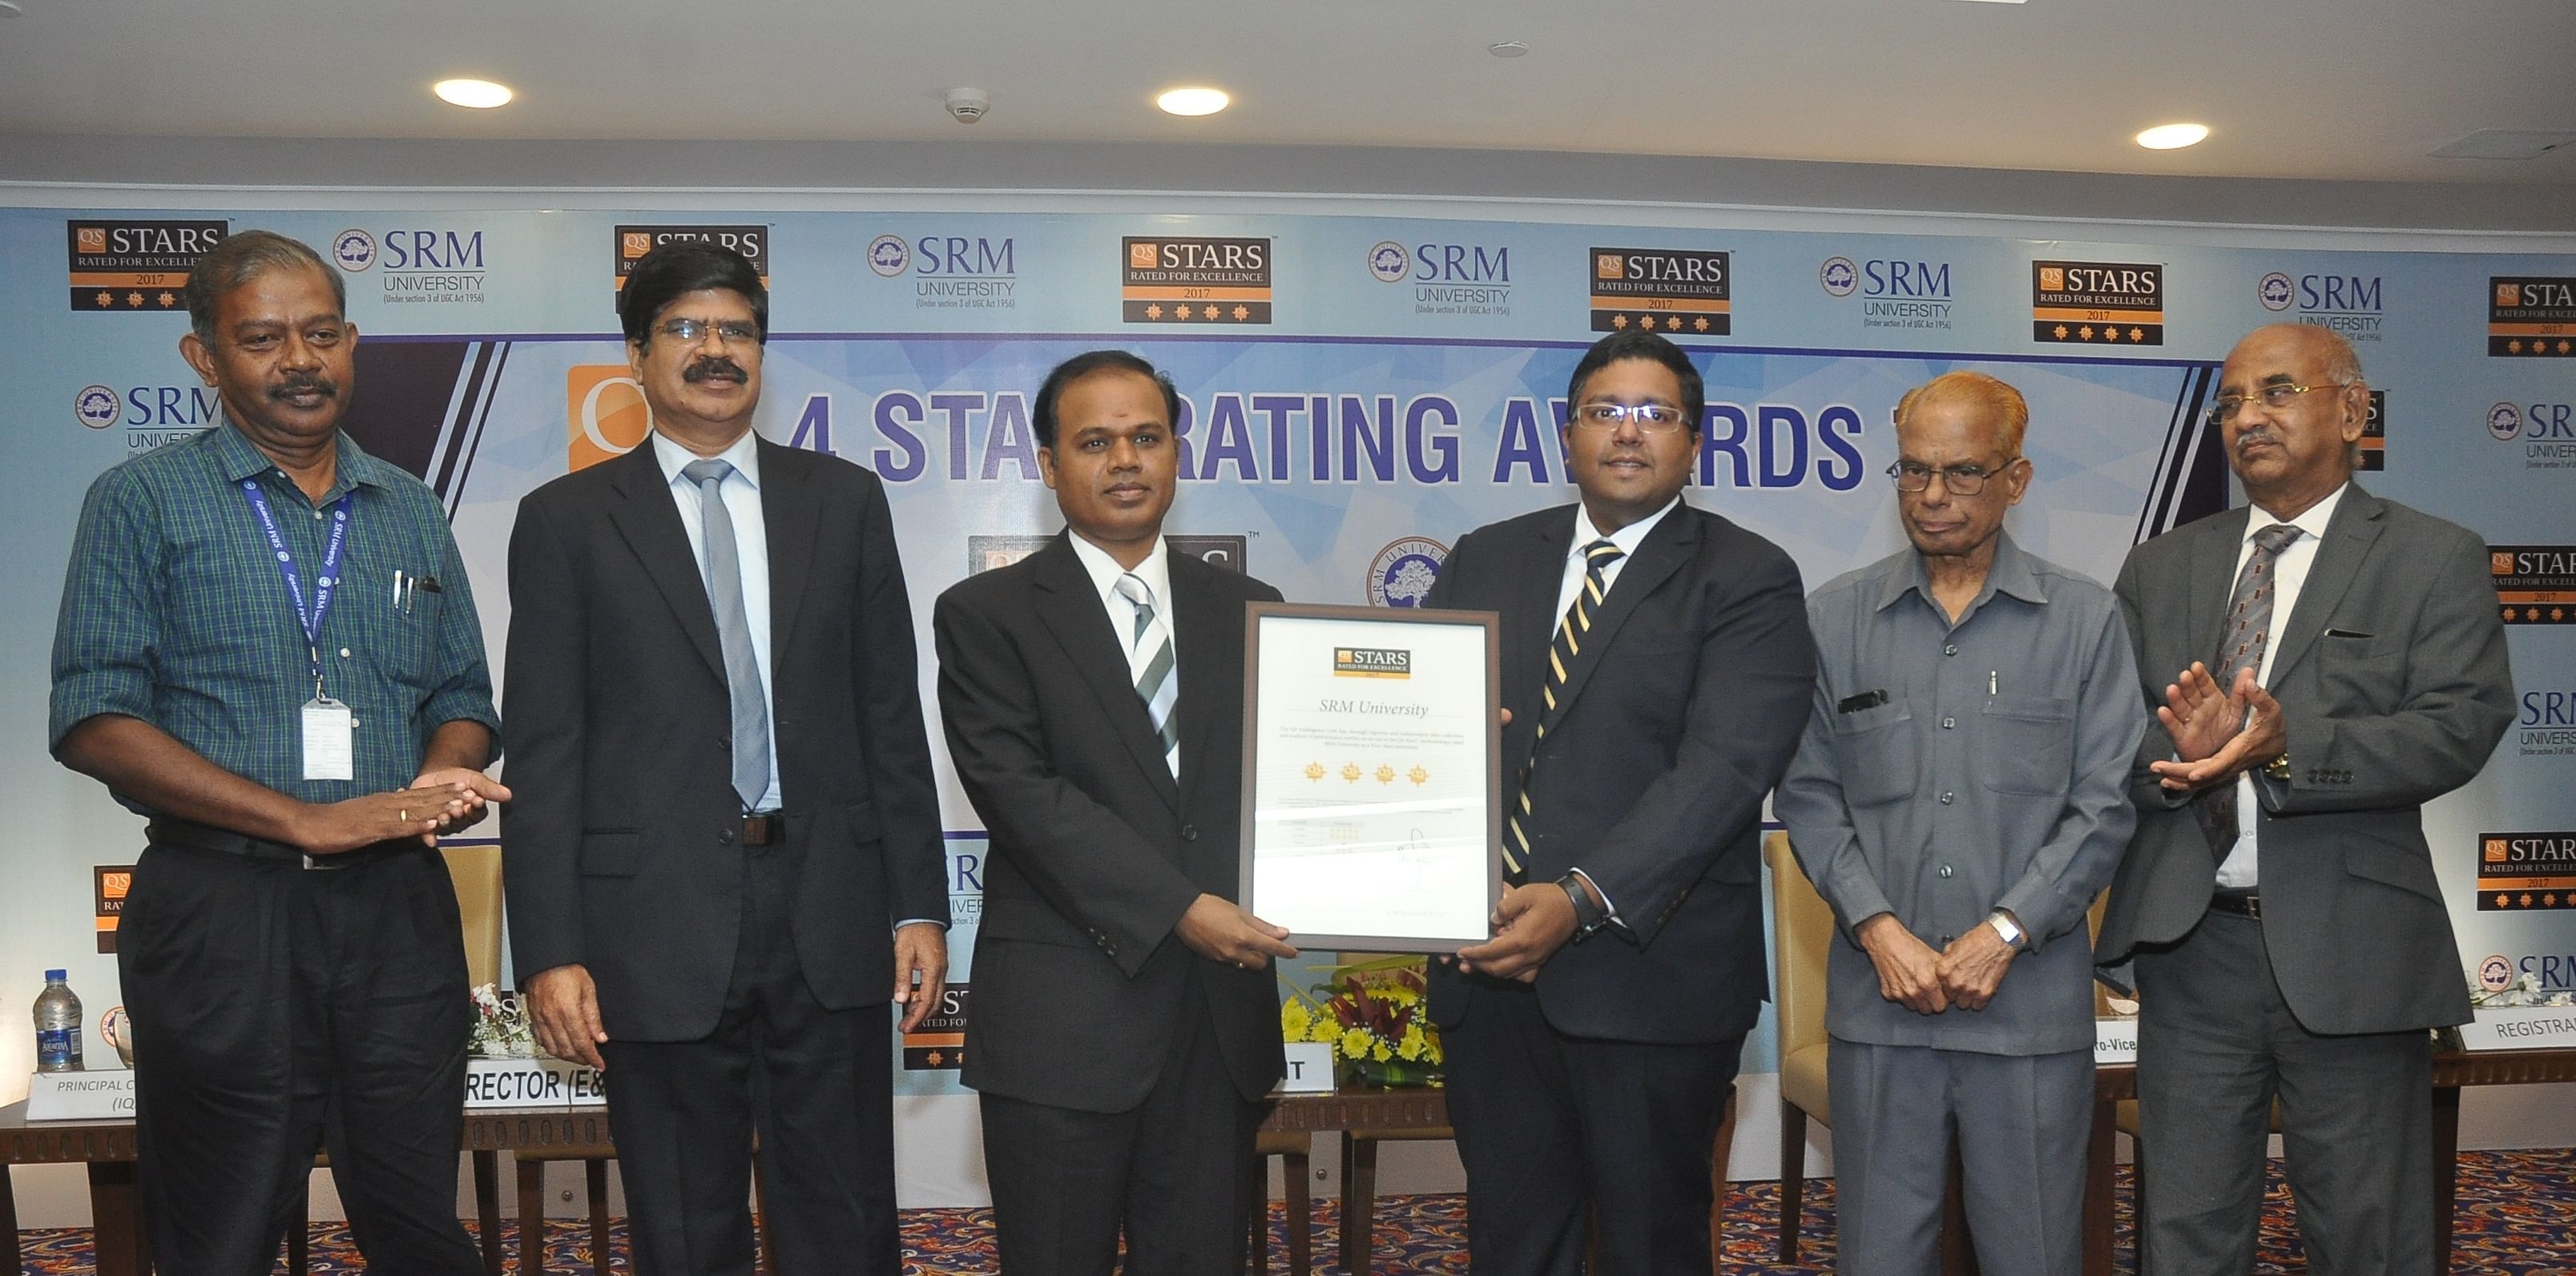 SRM University conferred with 4 Star Rating by Quacquarelli Symonds